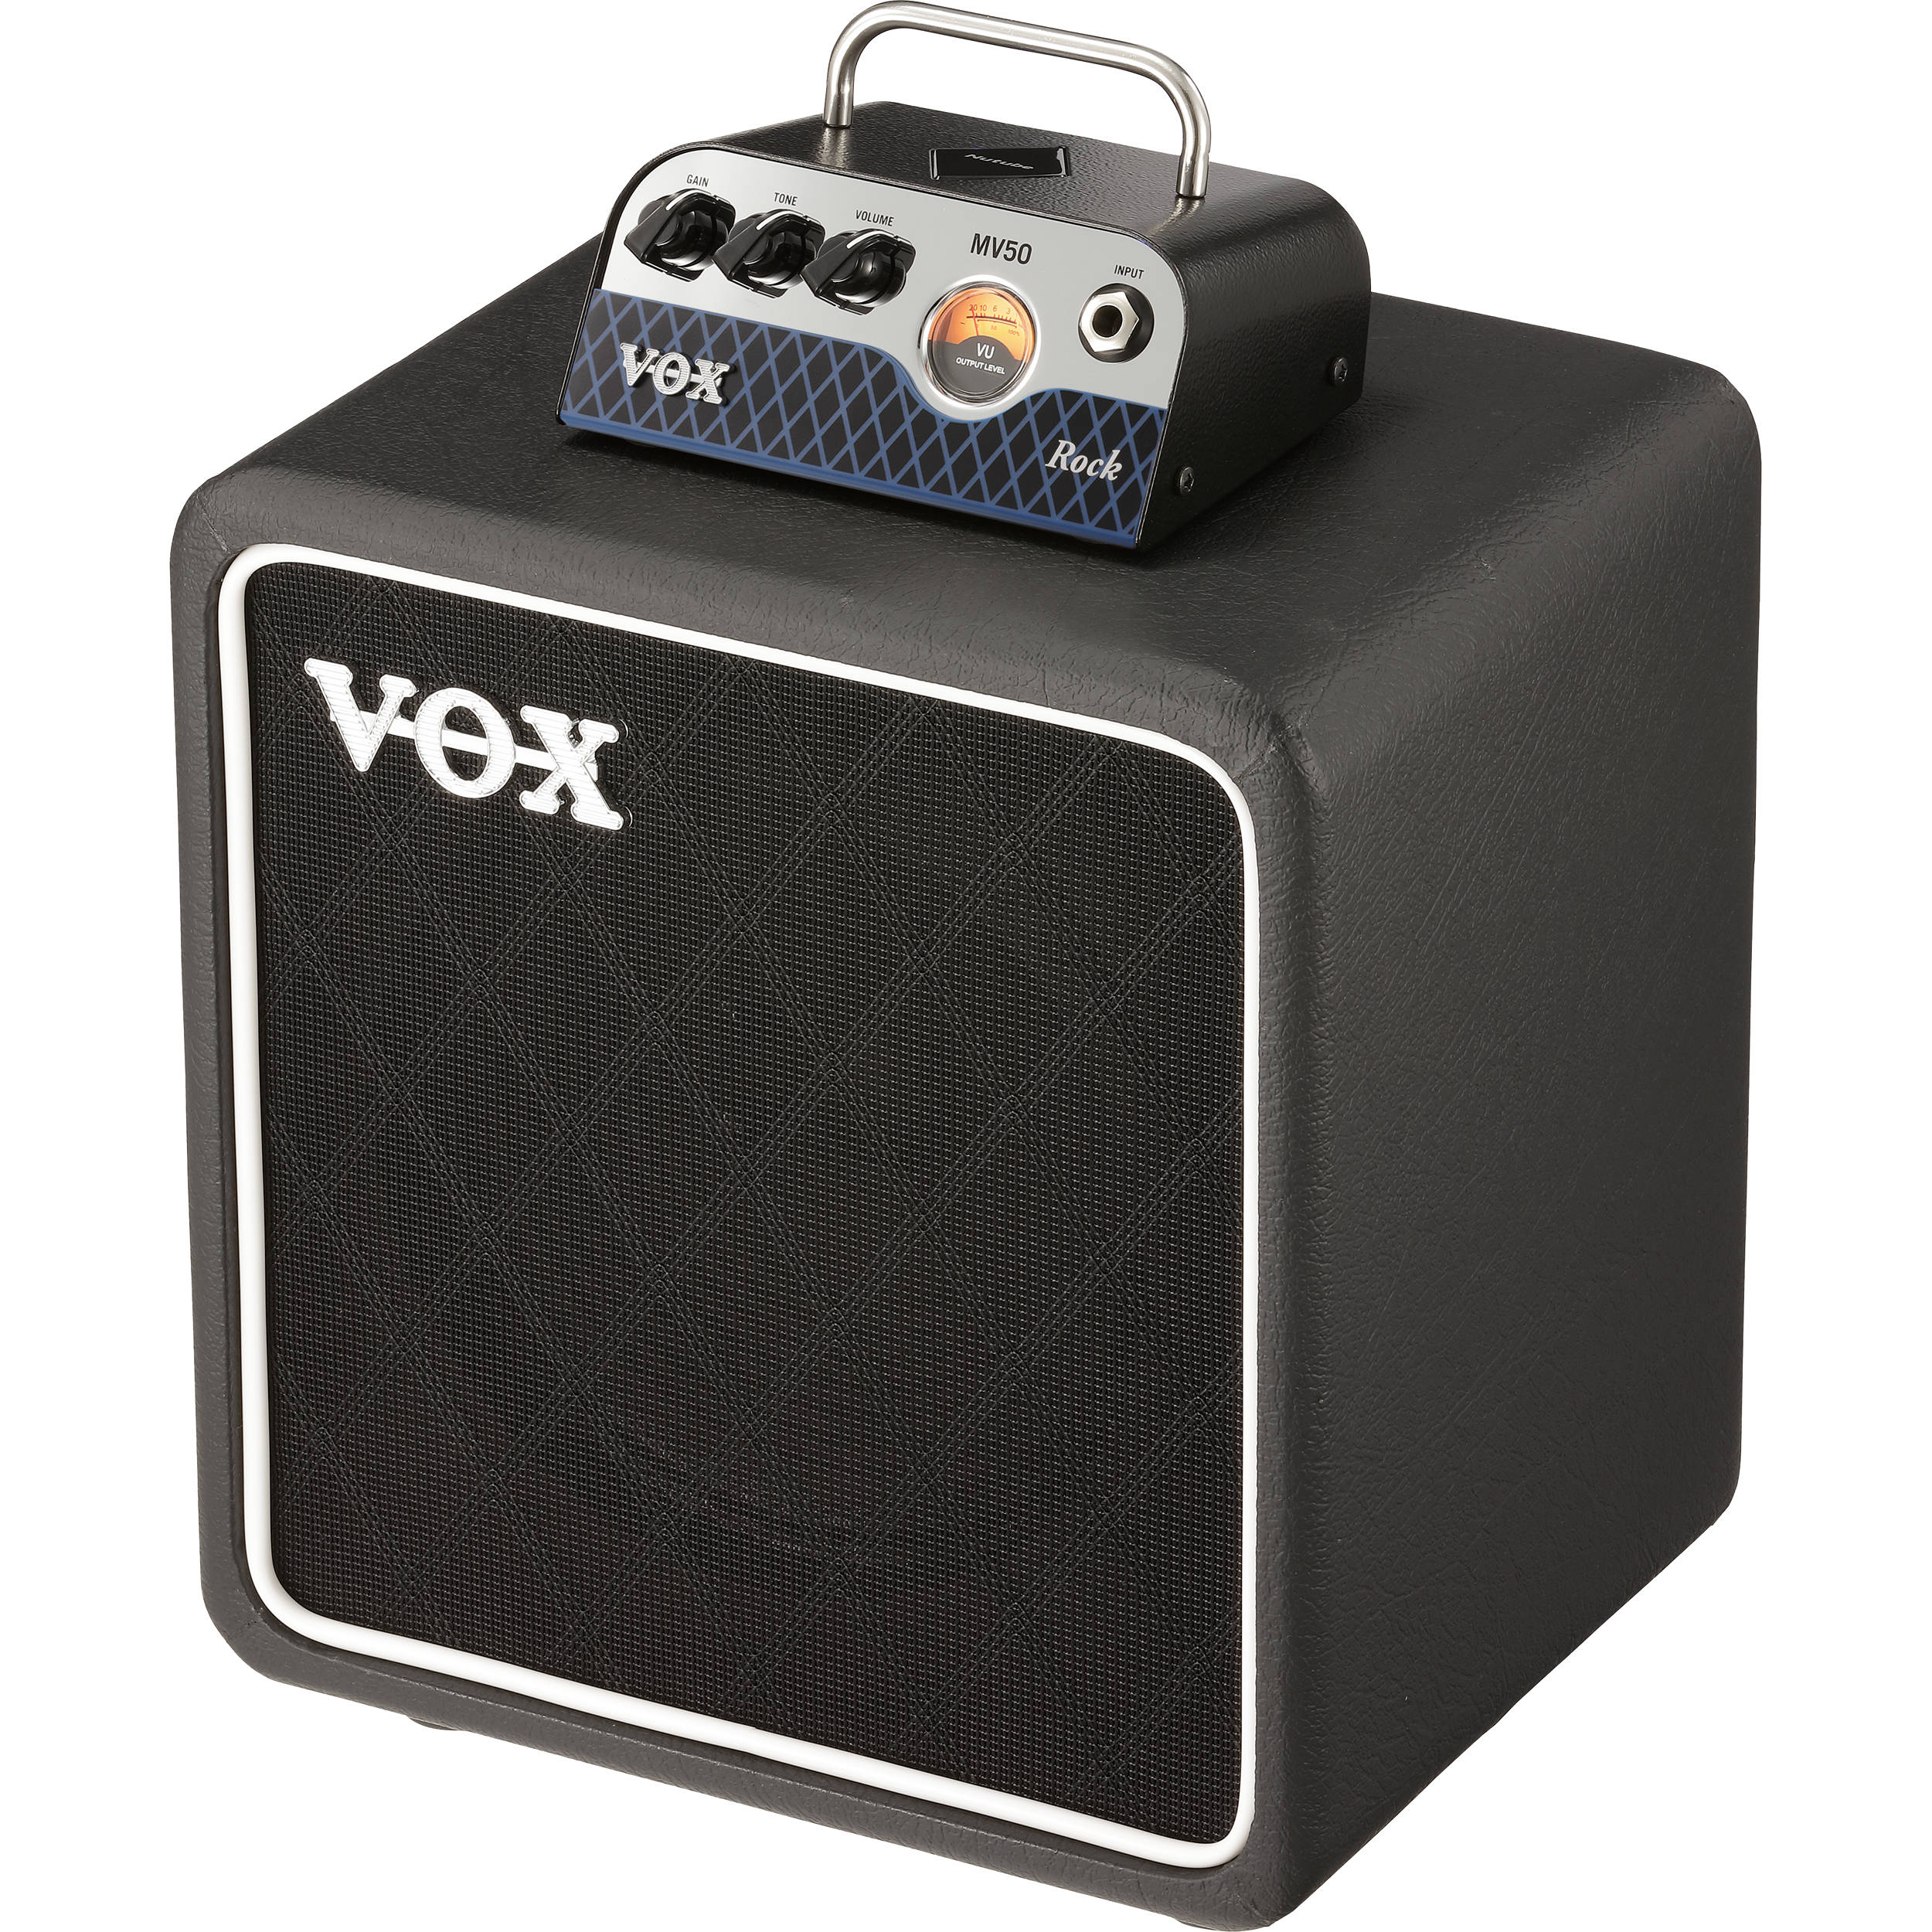 Vox Mv50 Rock Set Amplifier Head And Speaker Cabinet Mv50crset